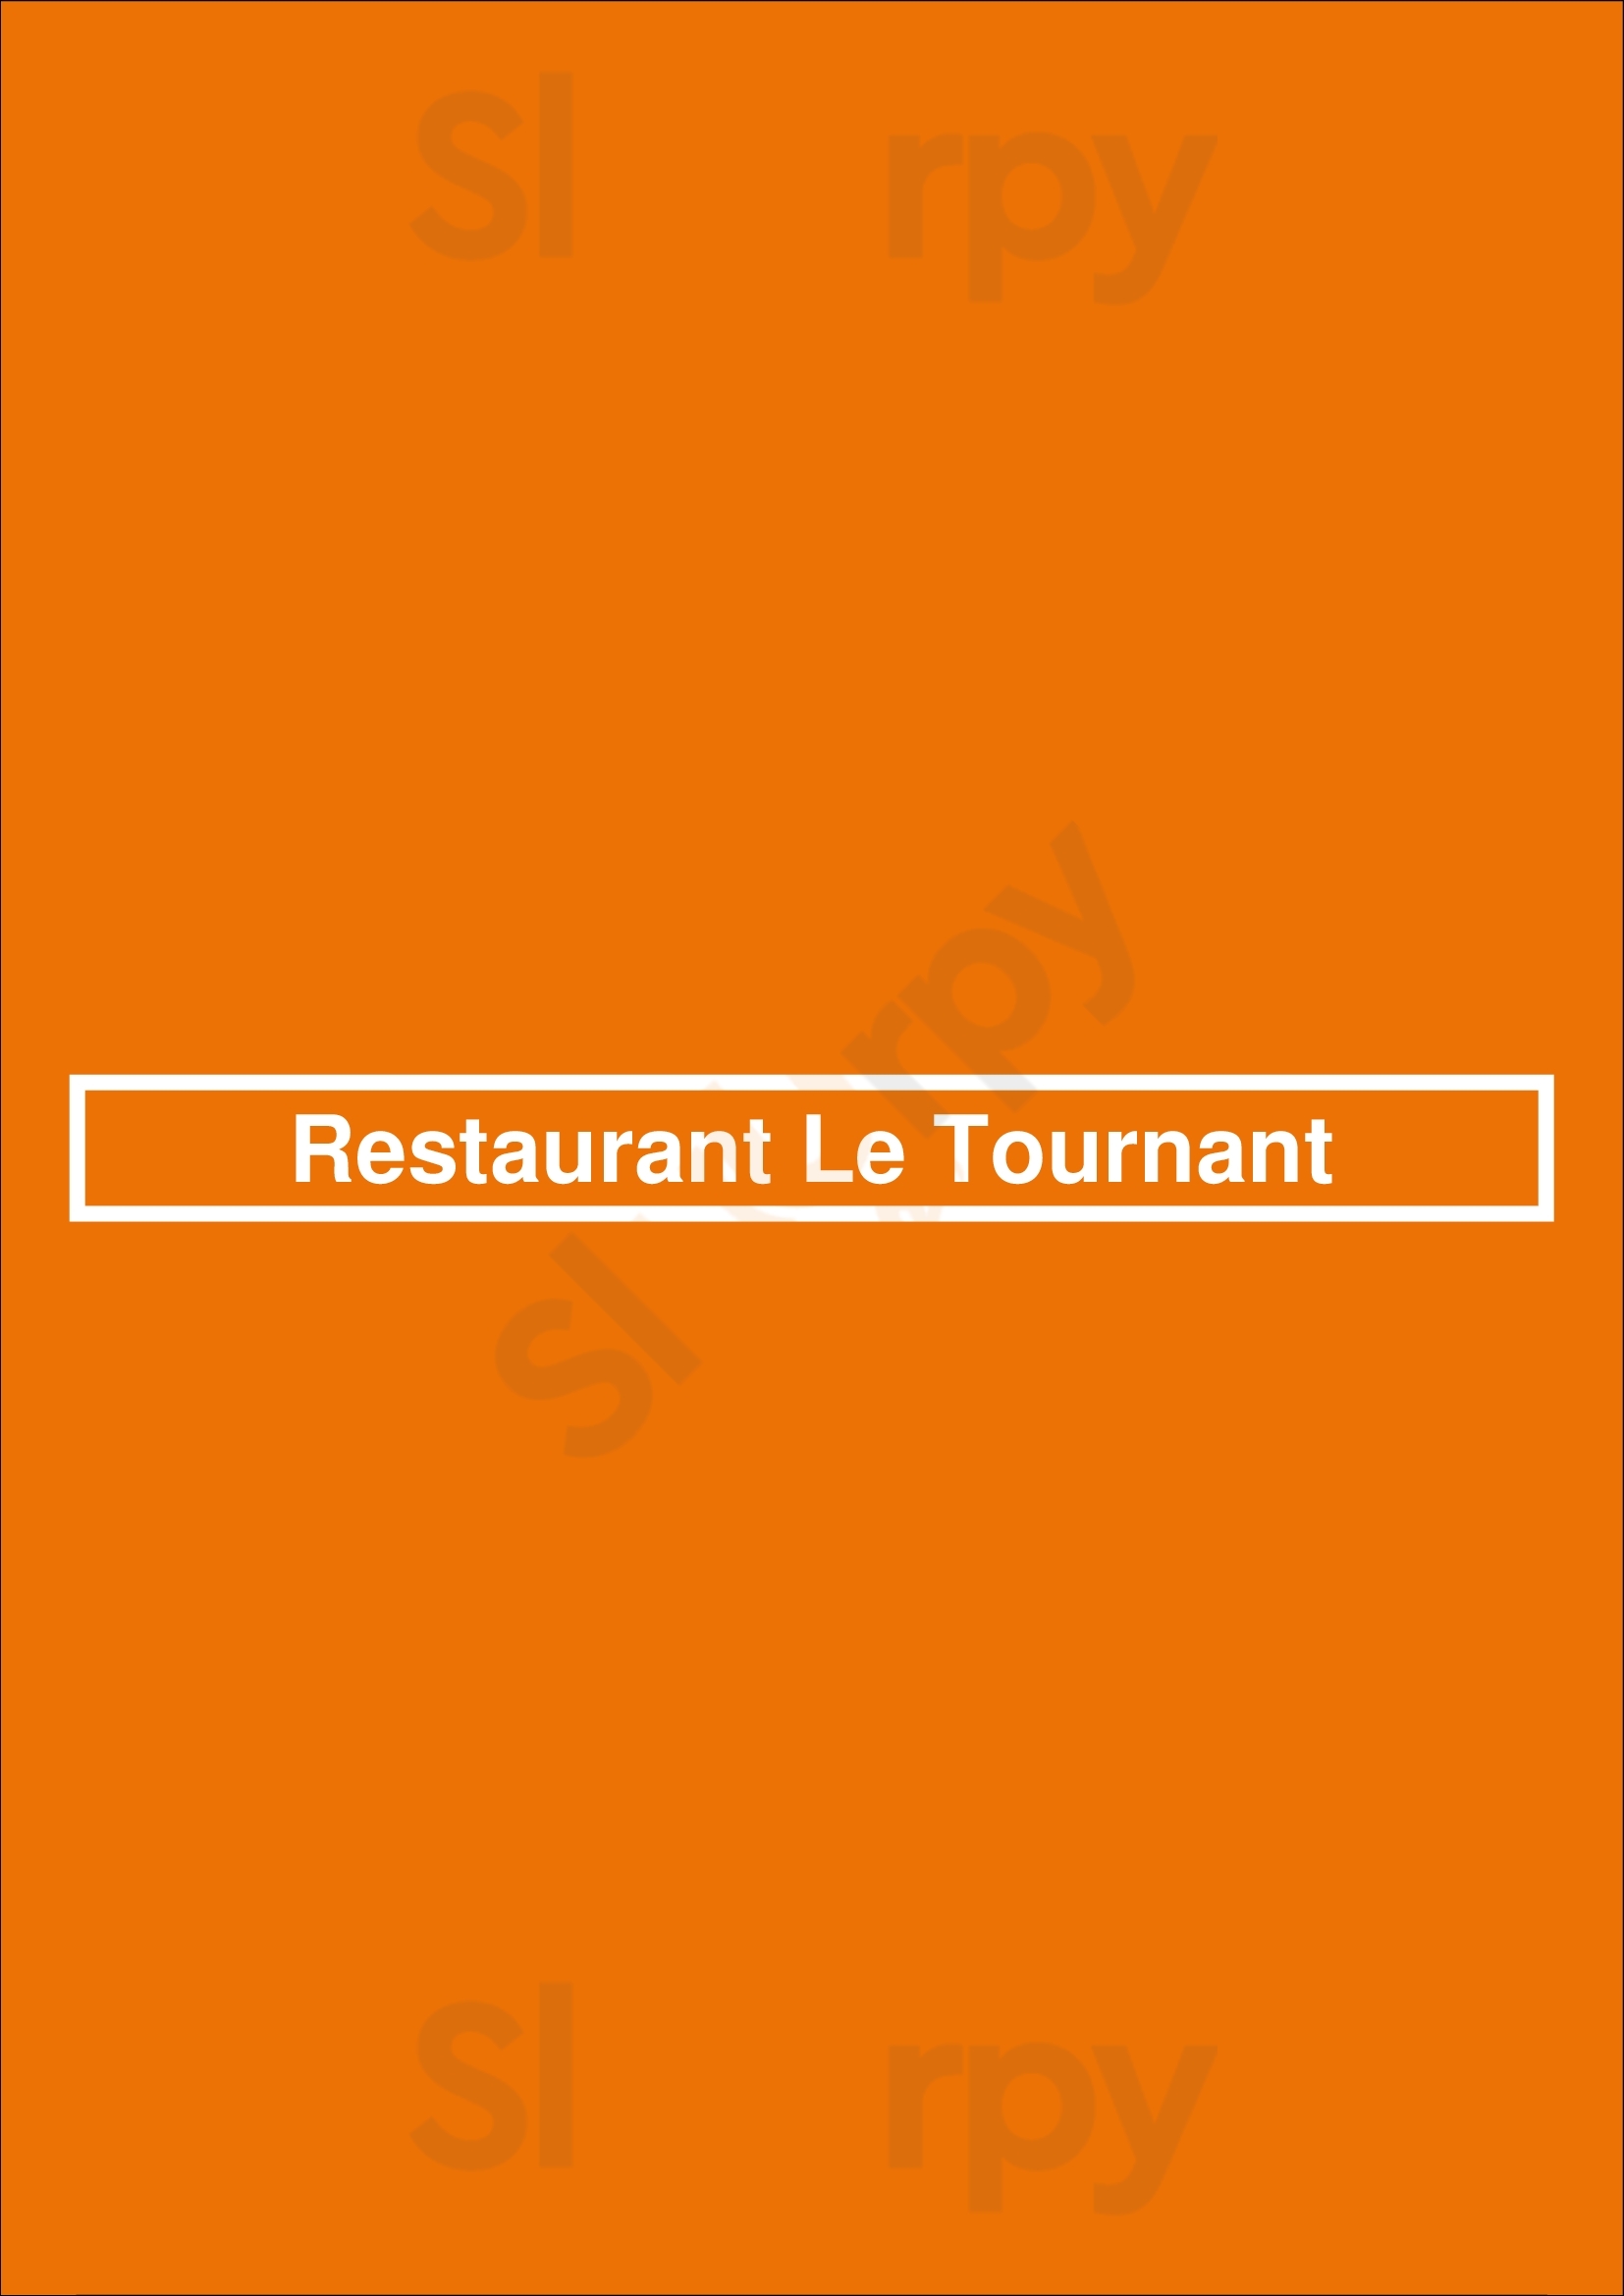 Restaurant Le Tournant Ixelles Menu - 1